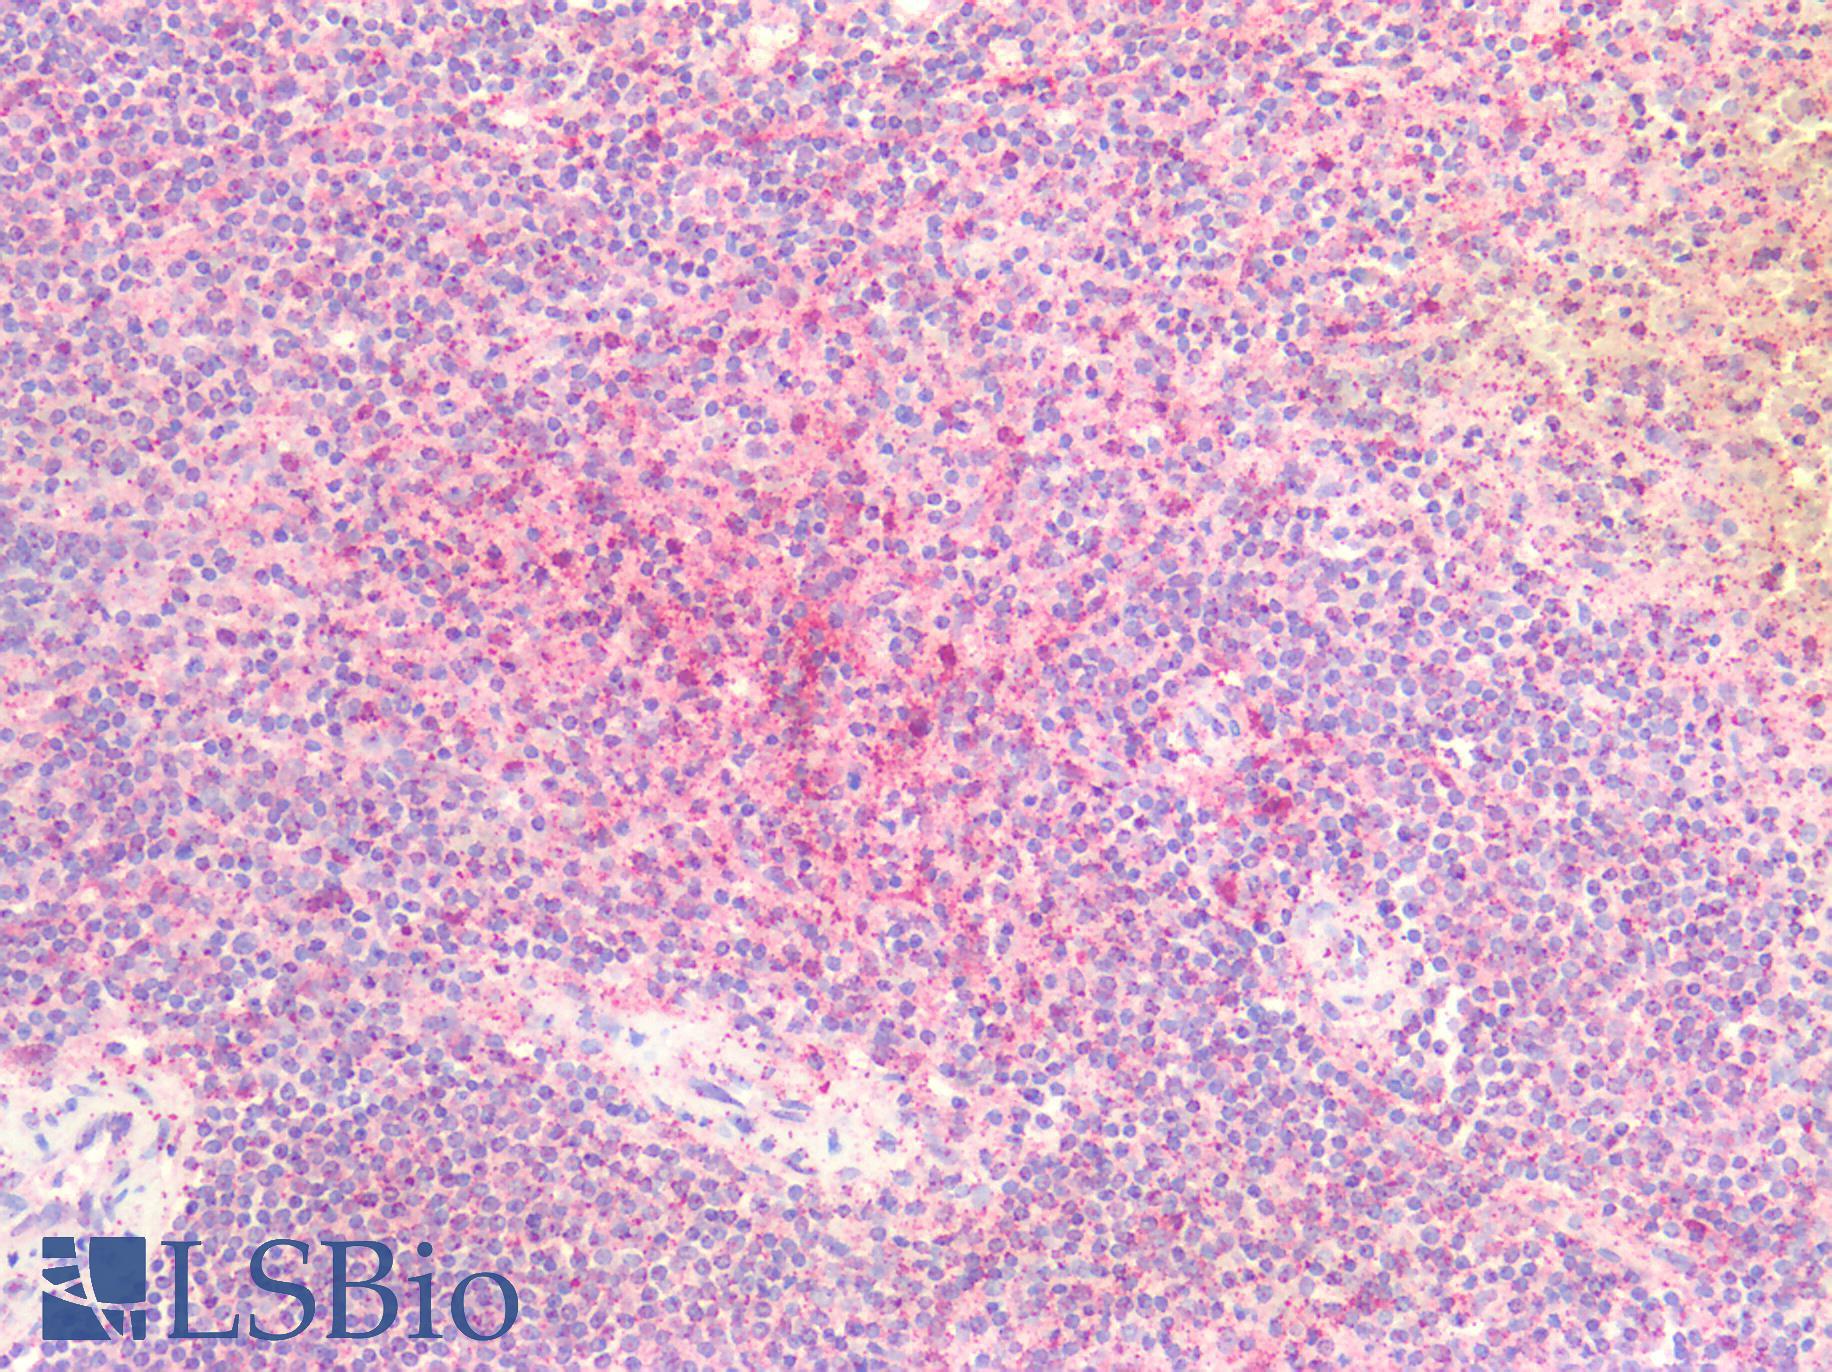 HDAC4 Antibody - Human Spleen: Formalin-Fixed, Paraffin-Embedded (FFPE)